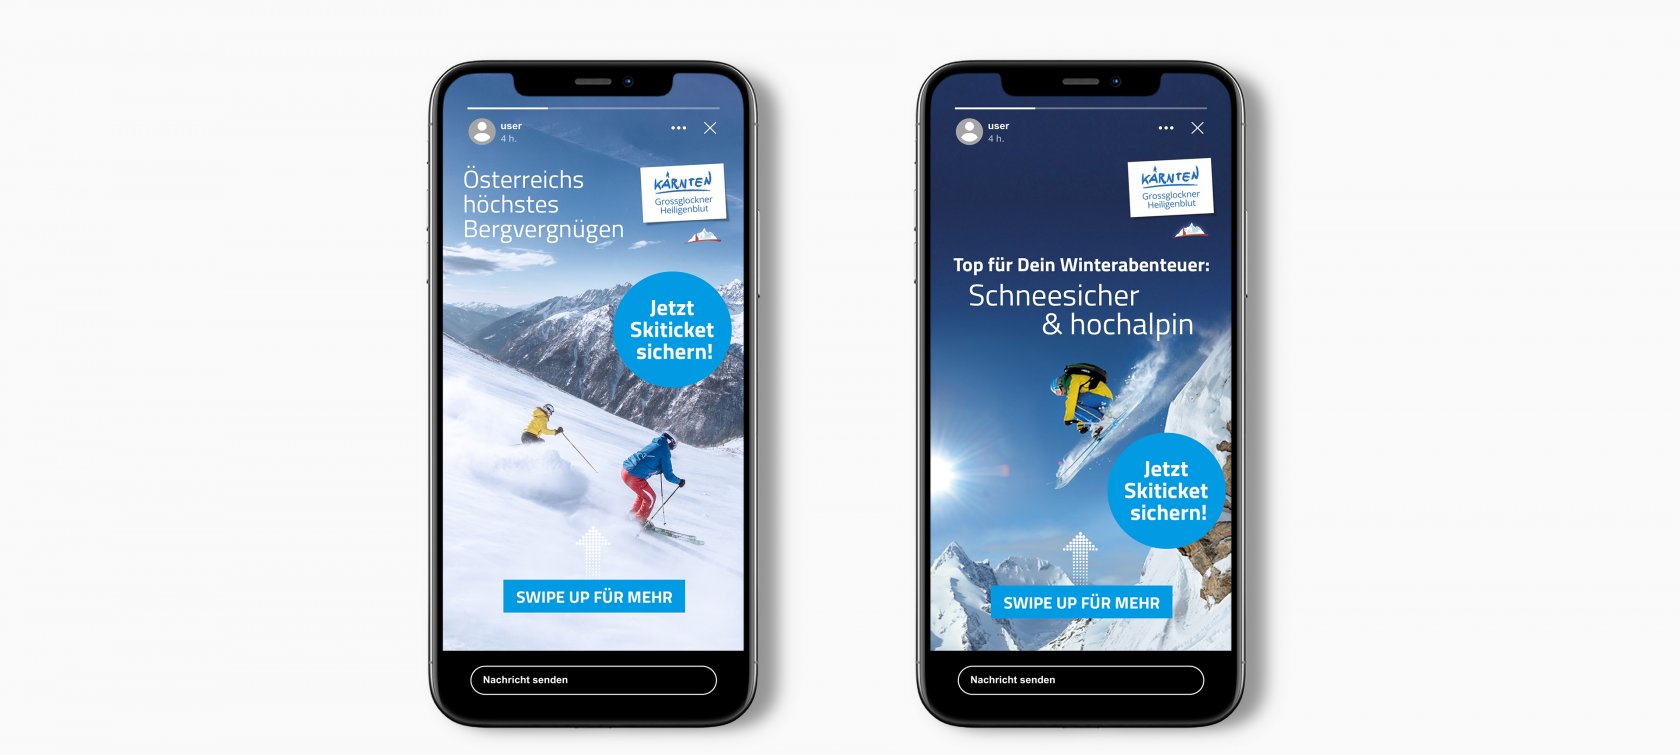 Großglockner Bergbahnen Touristik - Story Ads